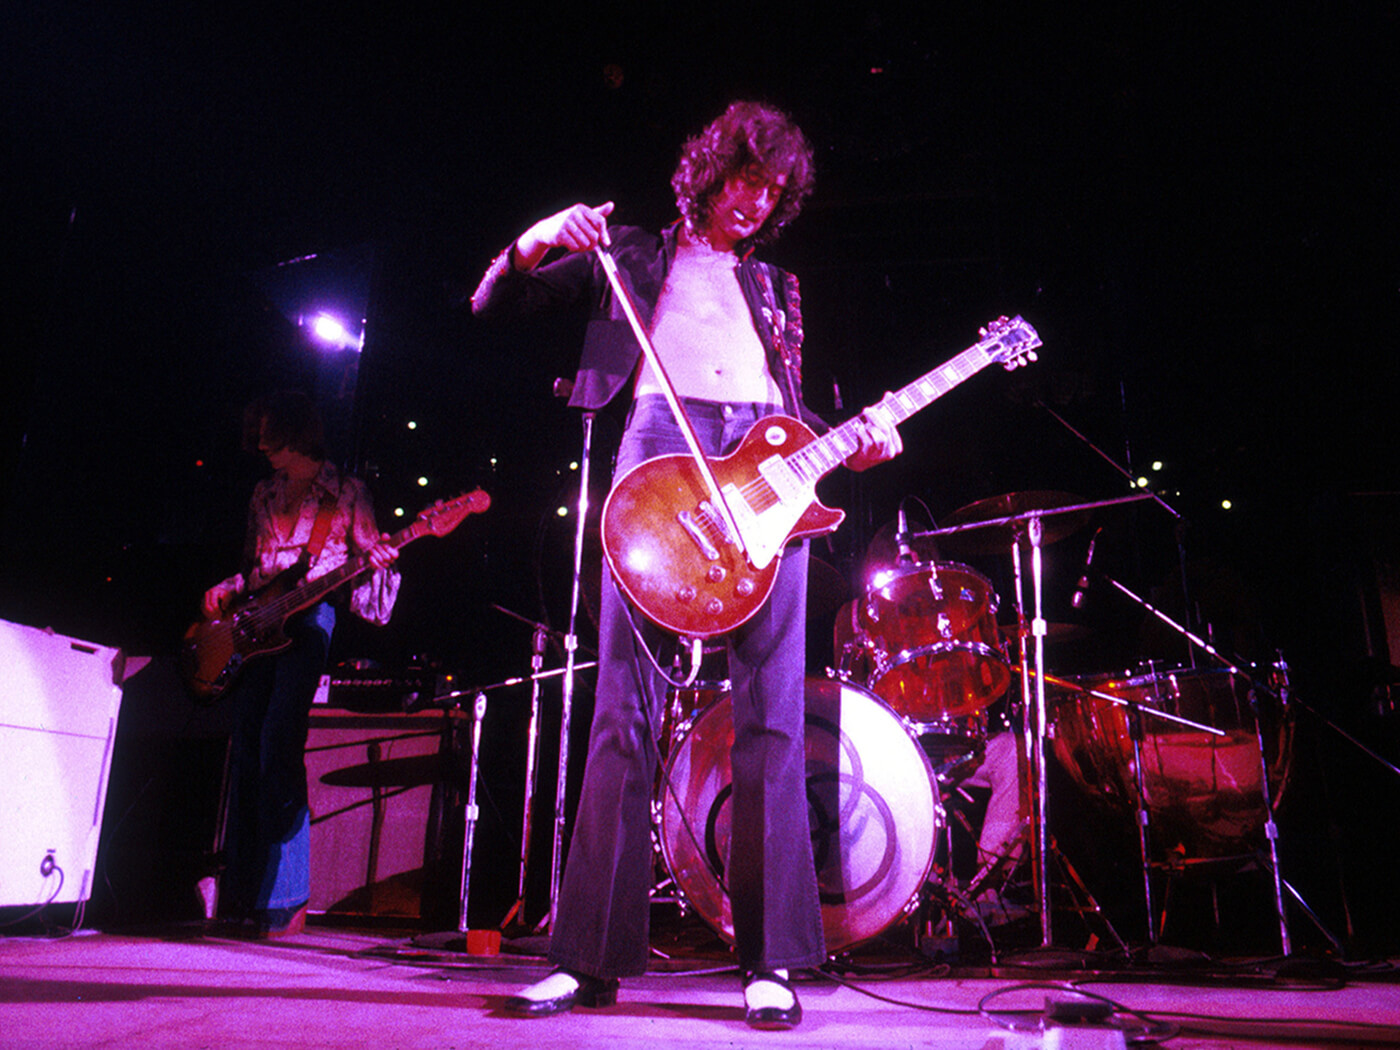 John Paul Jones and Jimmy Page of Led Zeppelin